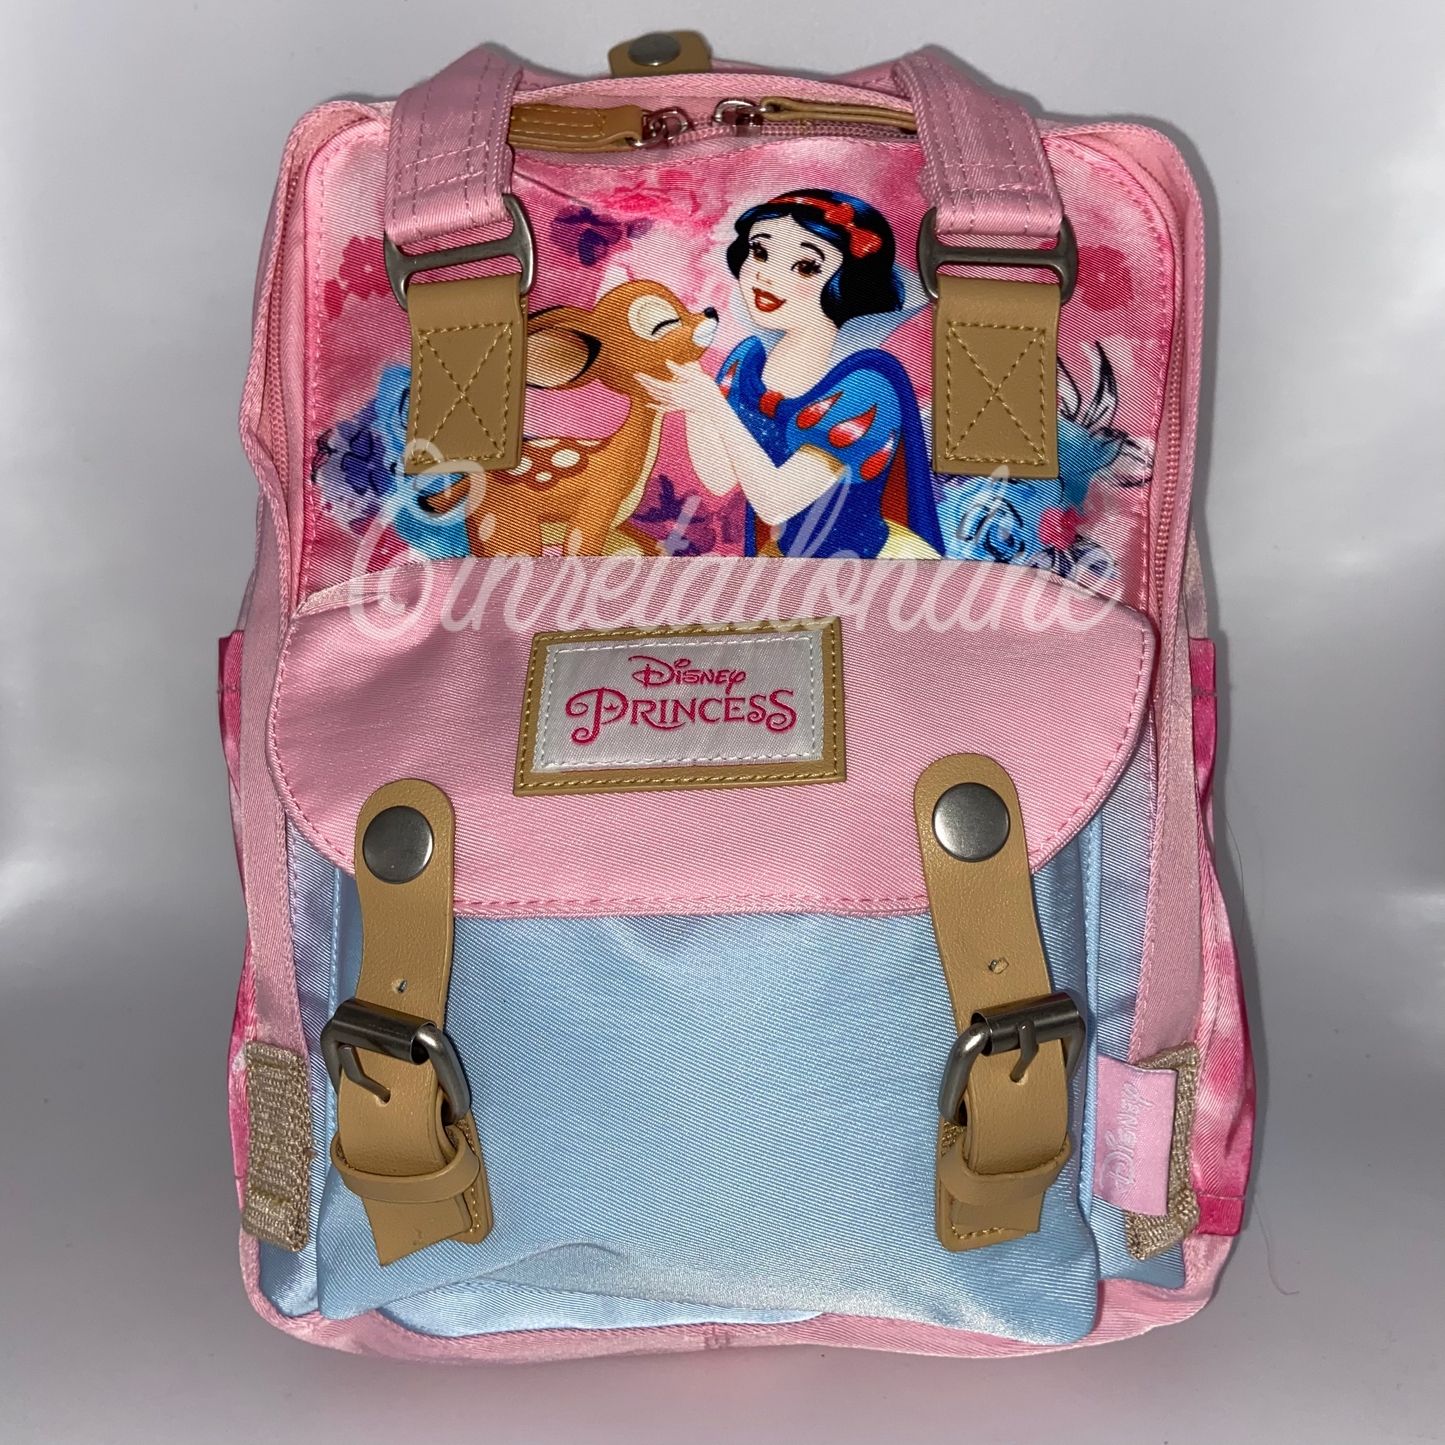 Snow White mini backpack